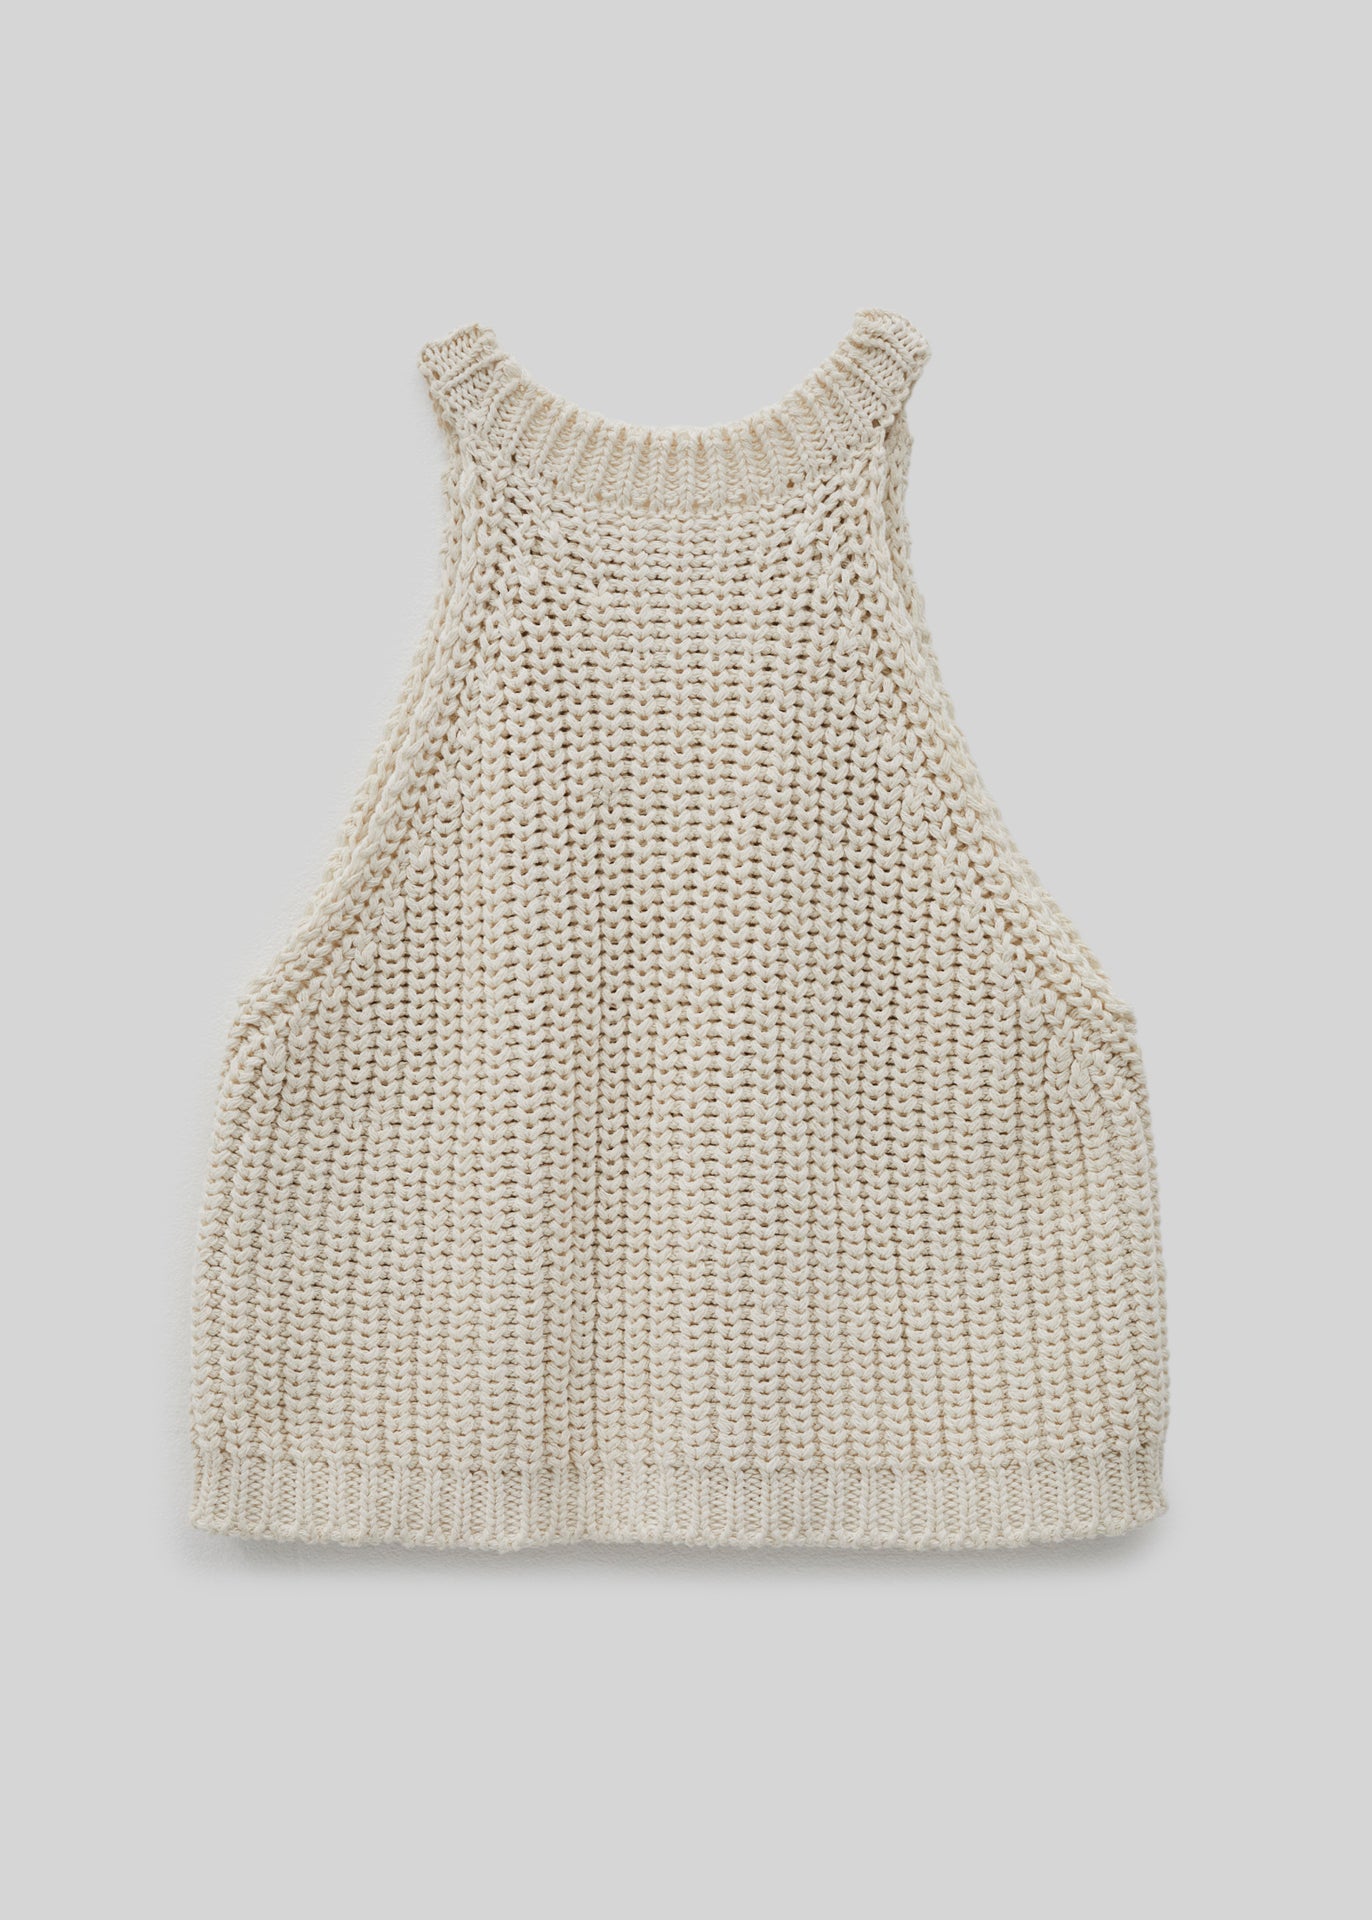 Cordera knit top - M